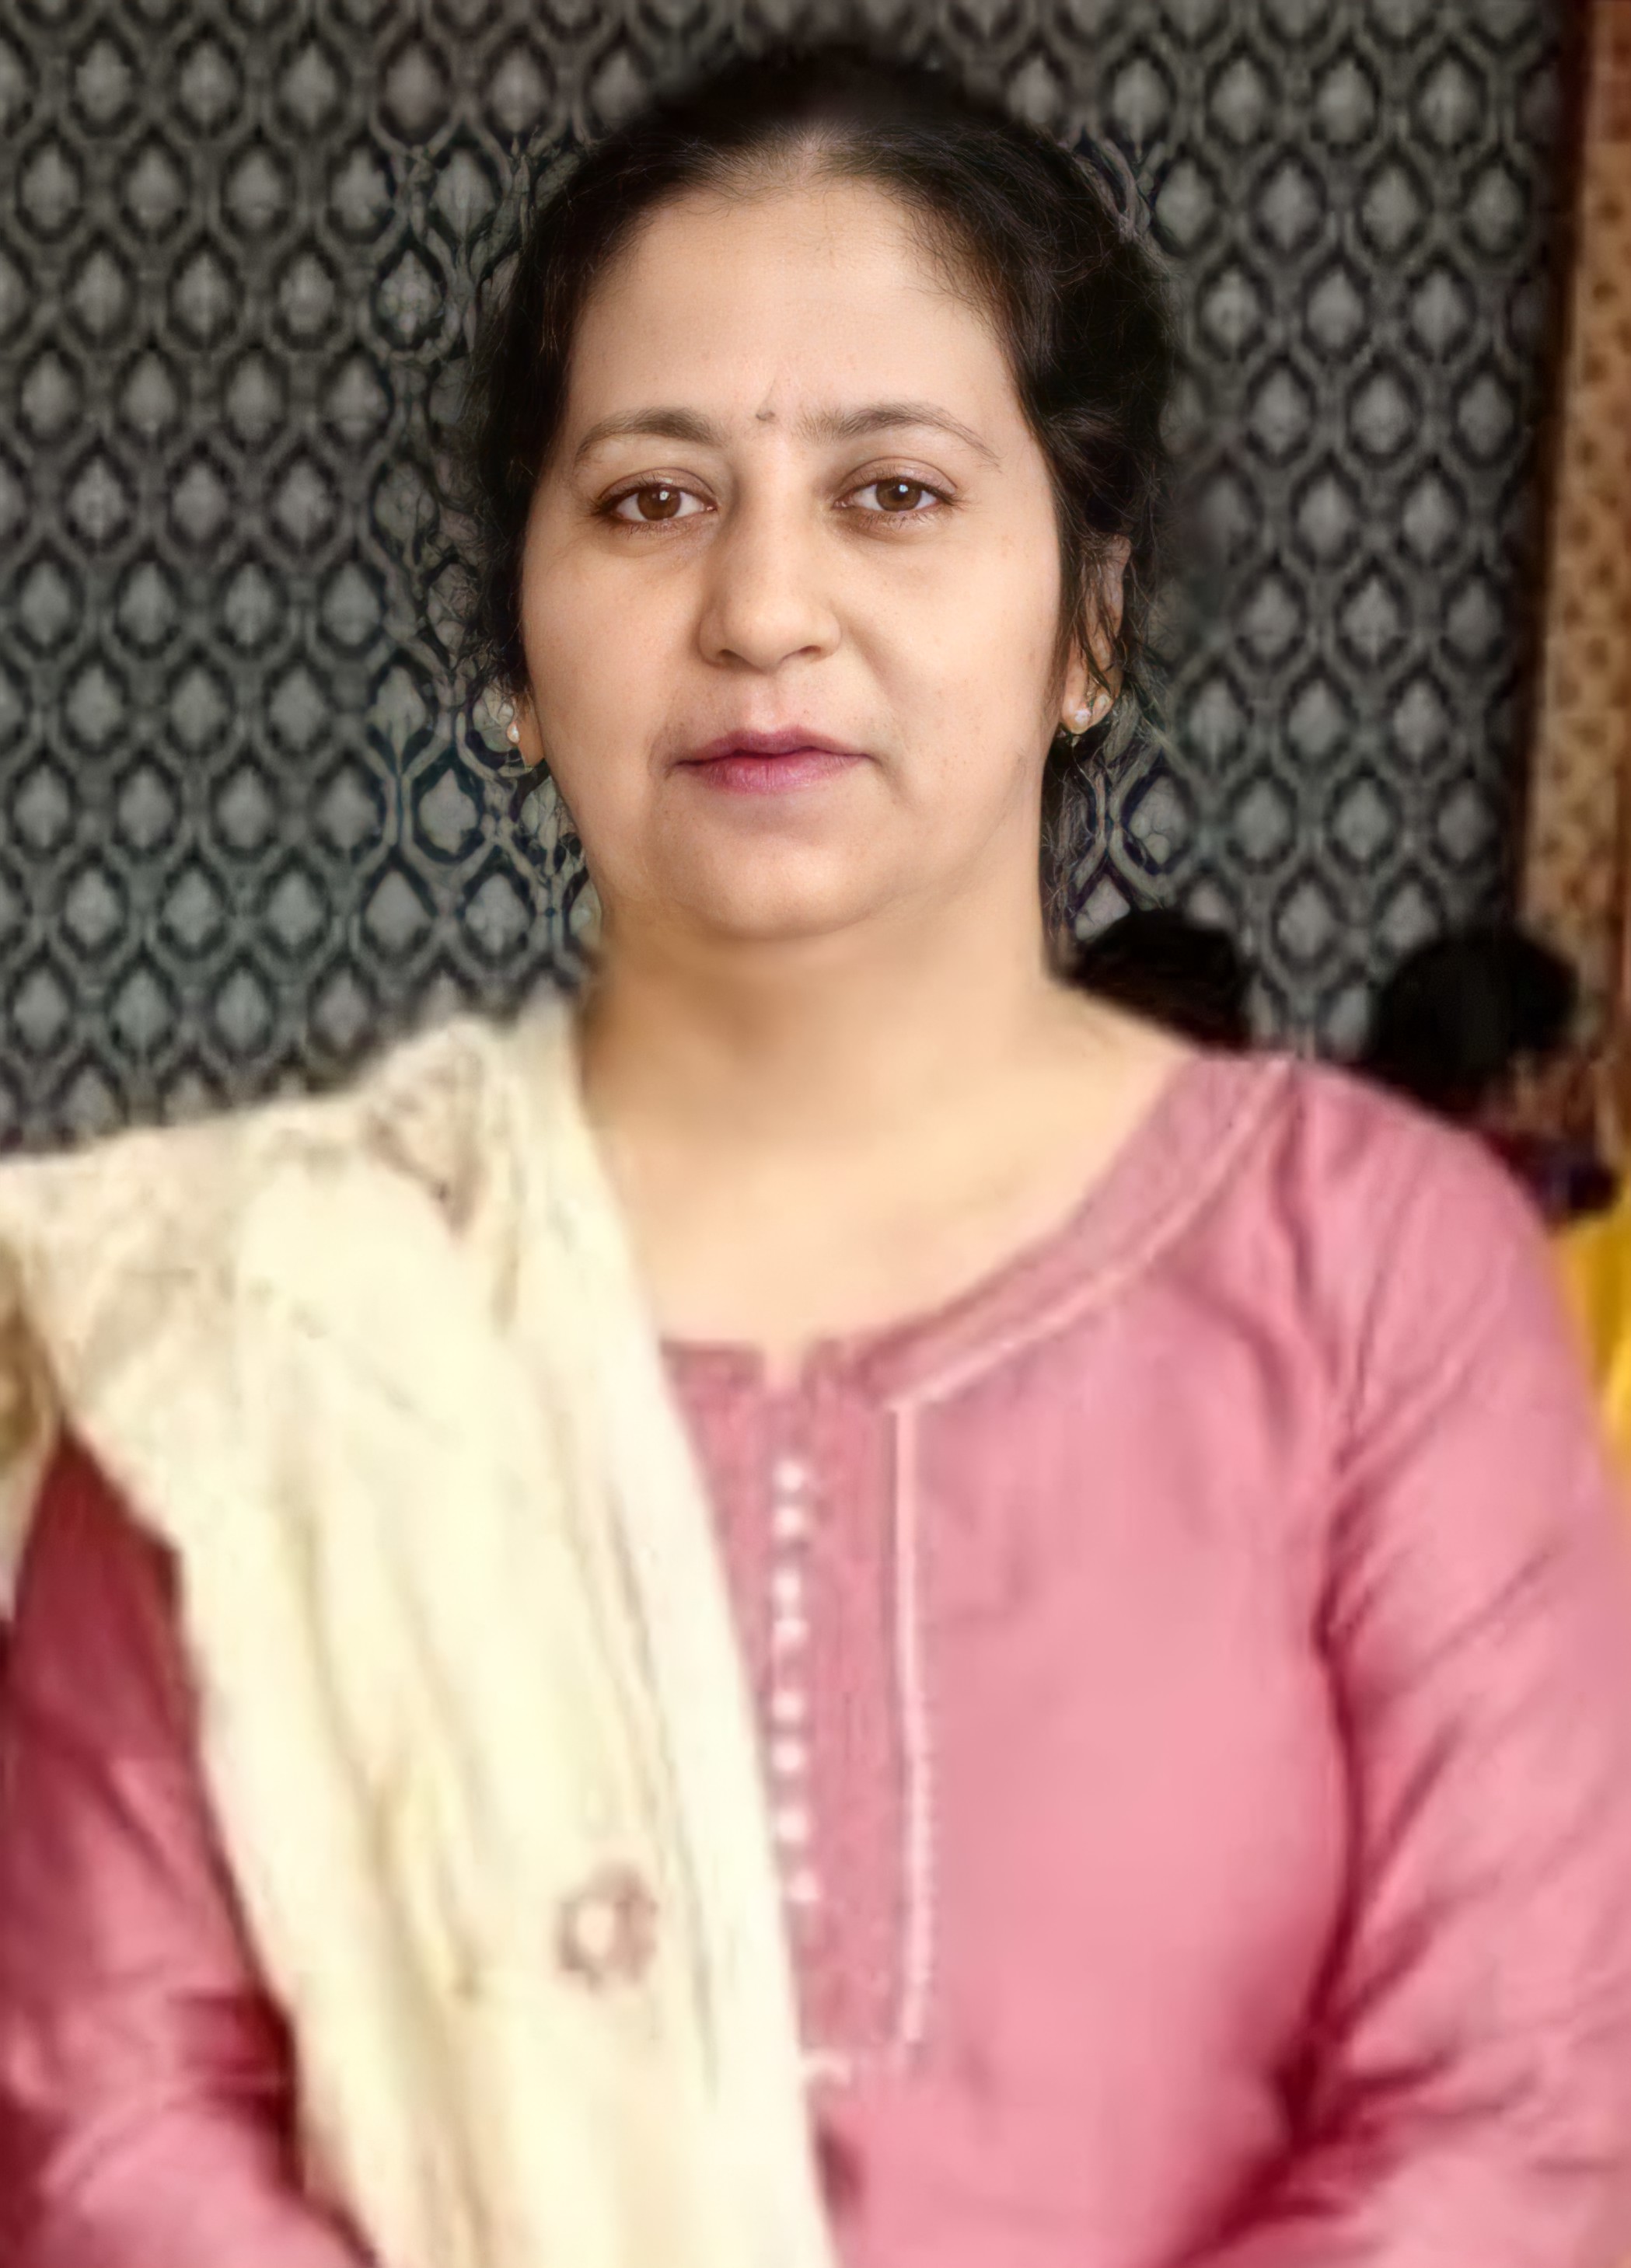 Dr. Ranjeet Kaur